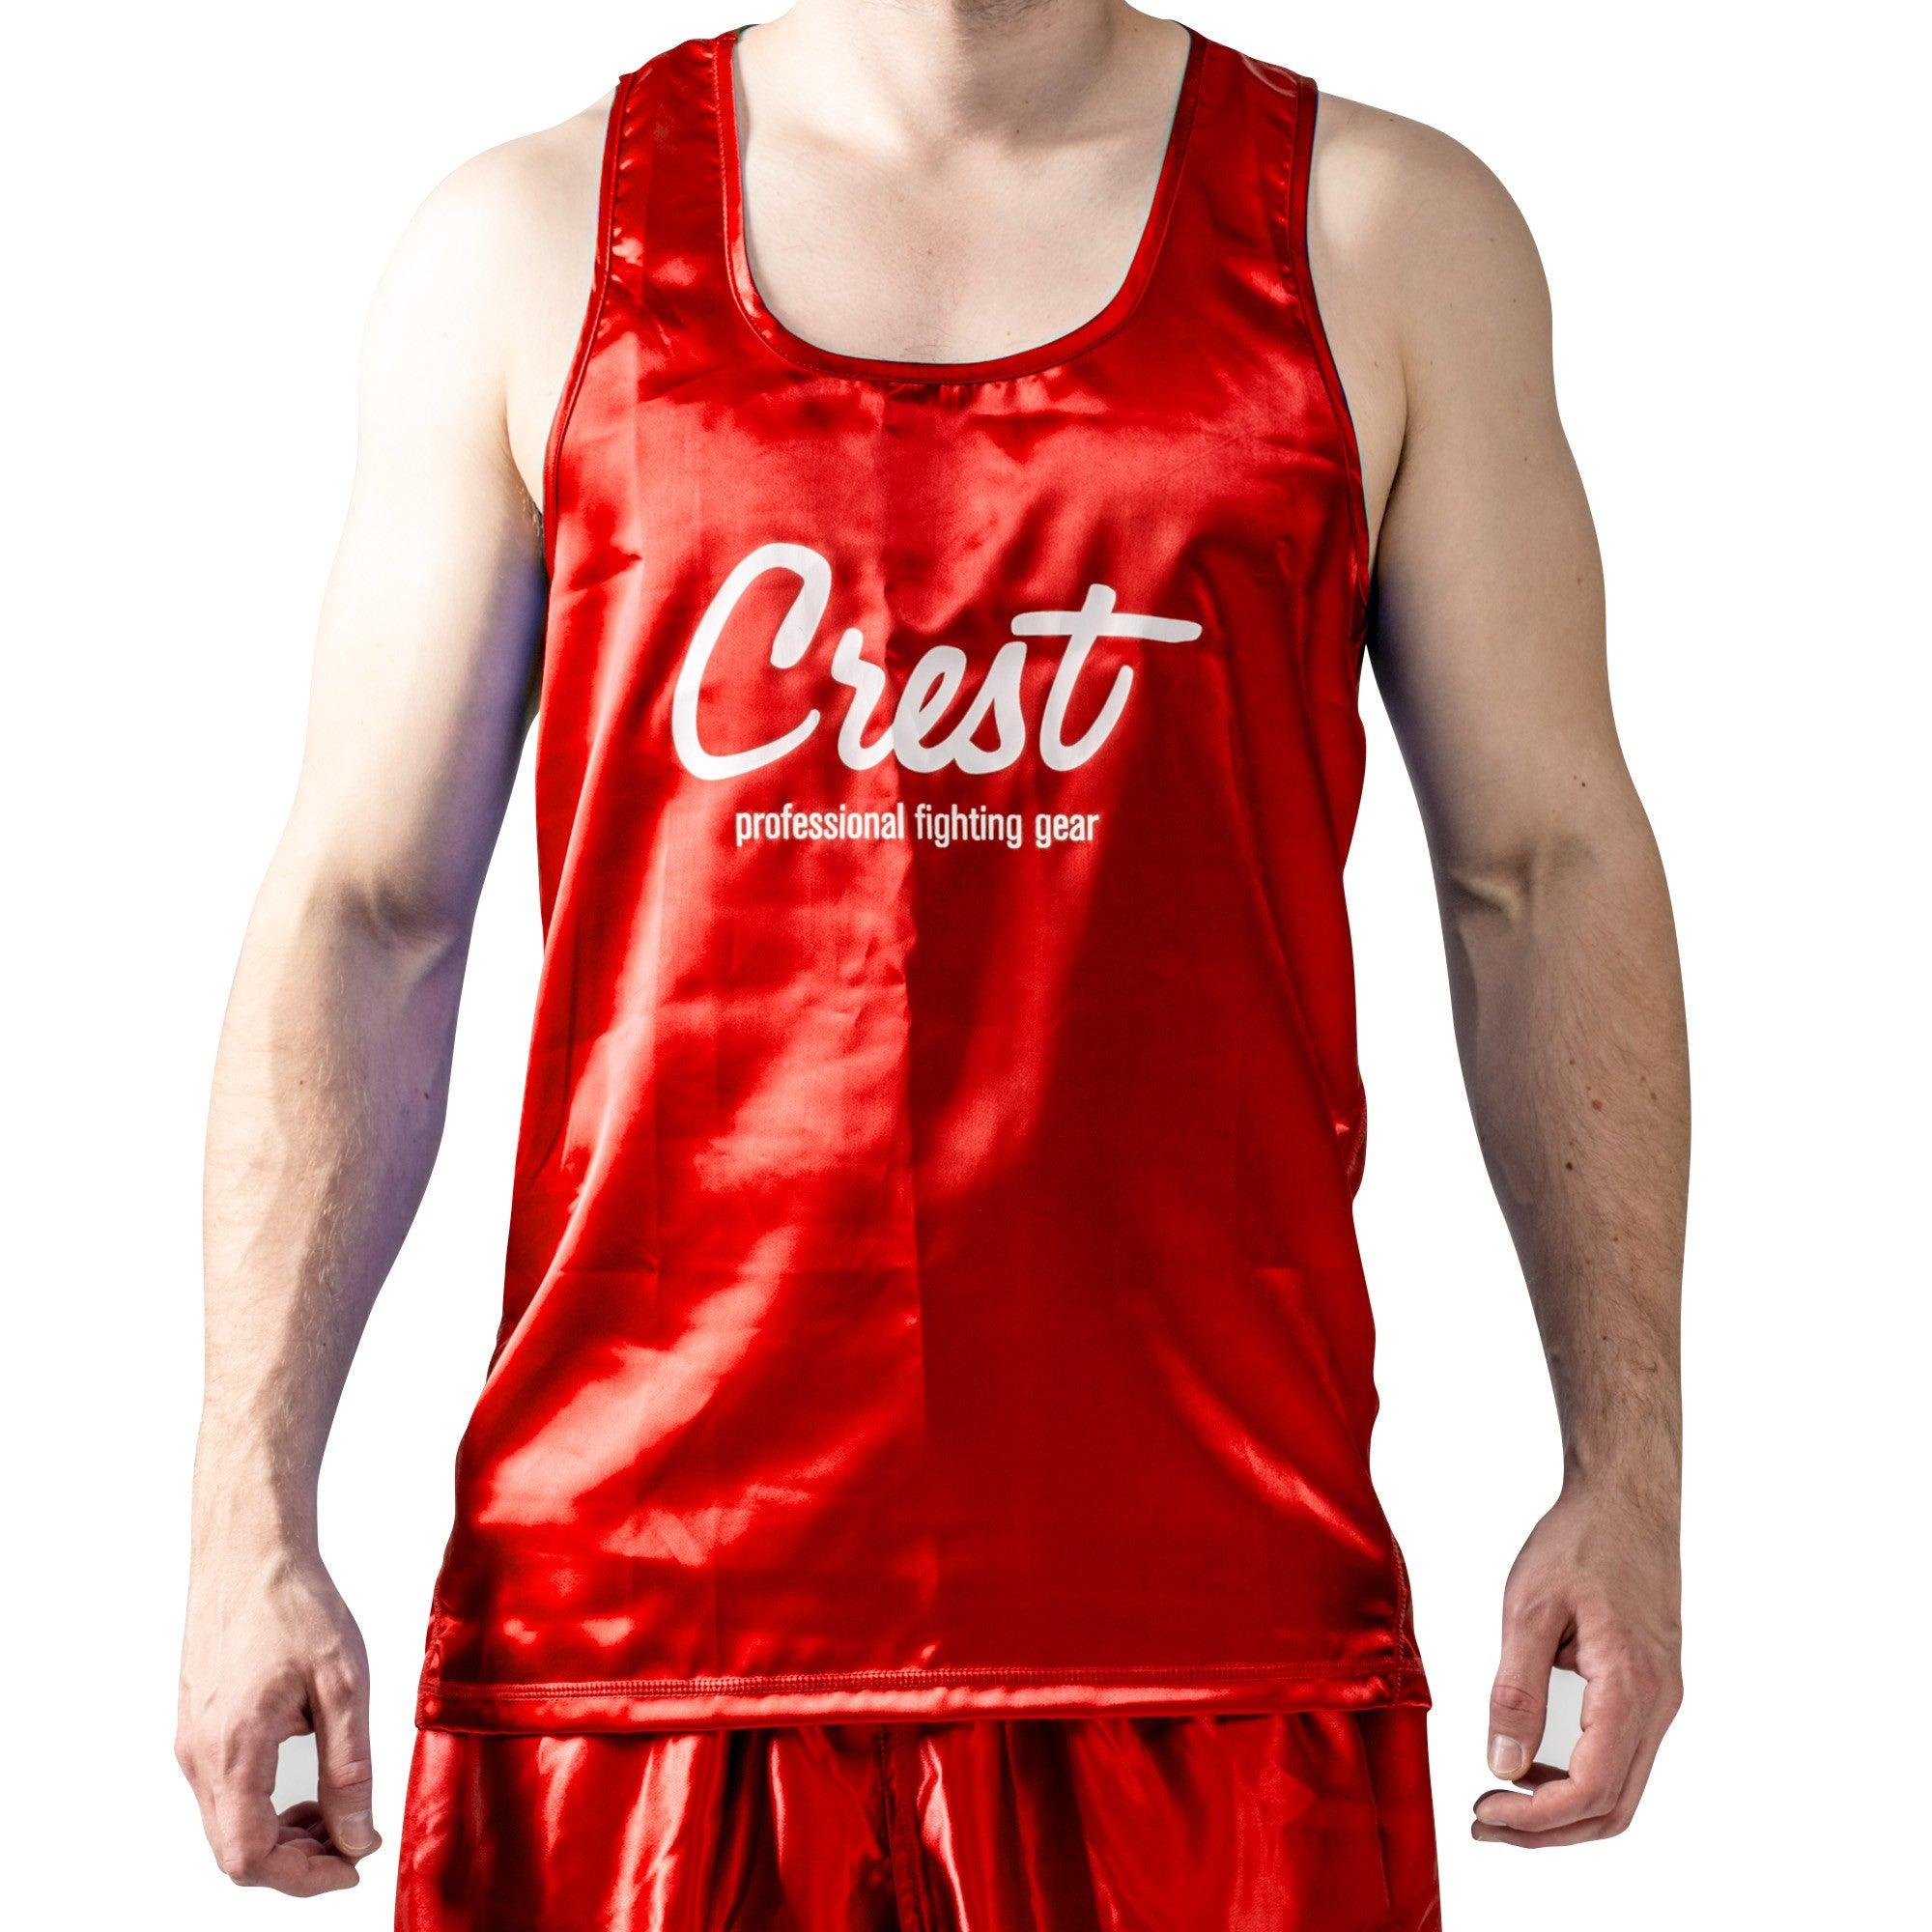 Crest’s boxing shirt - Crest - PFG